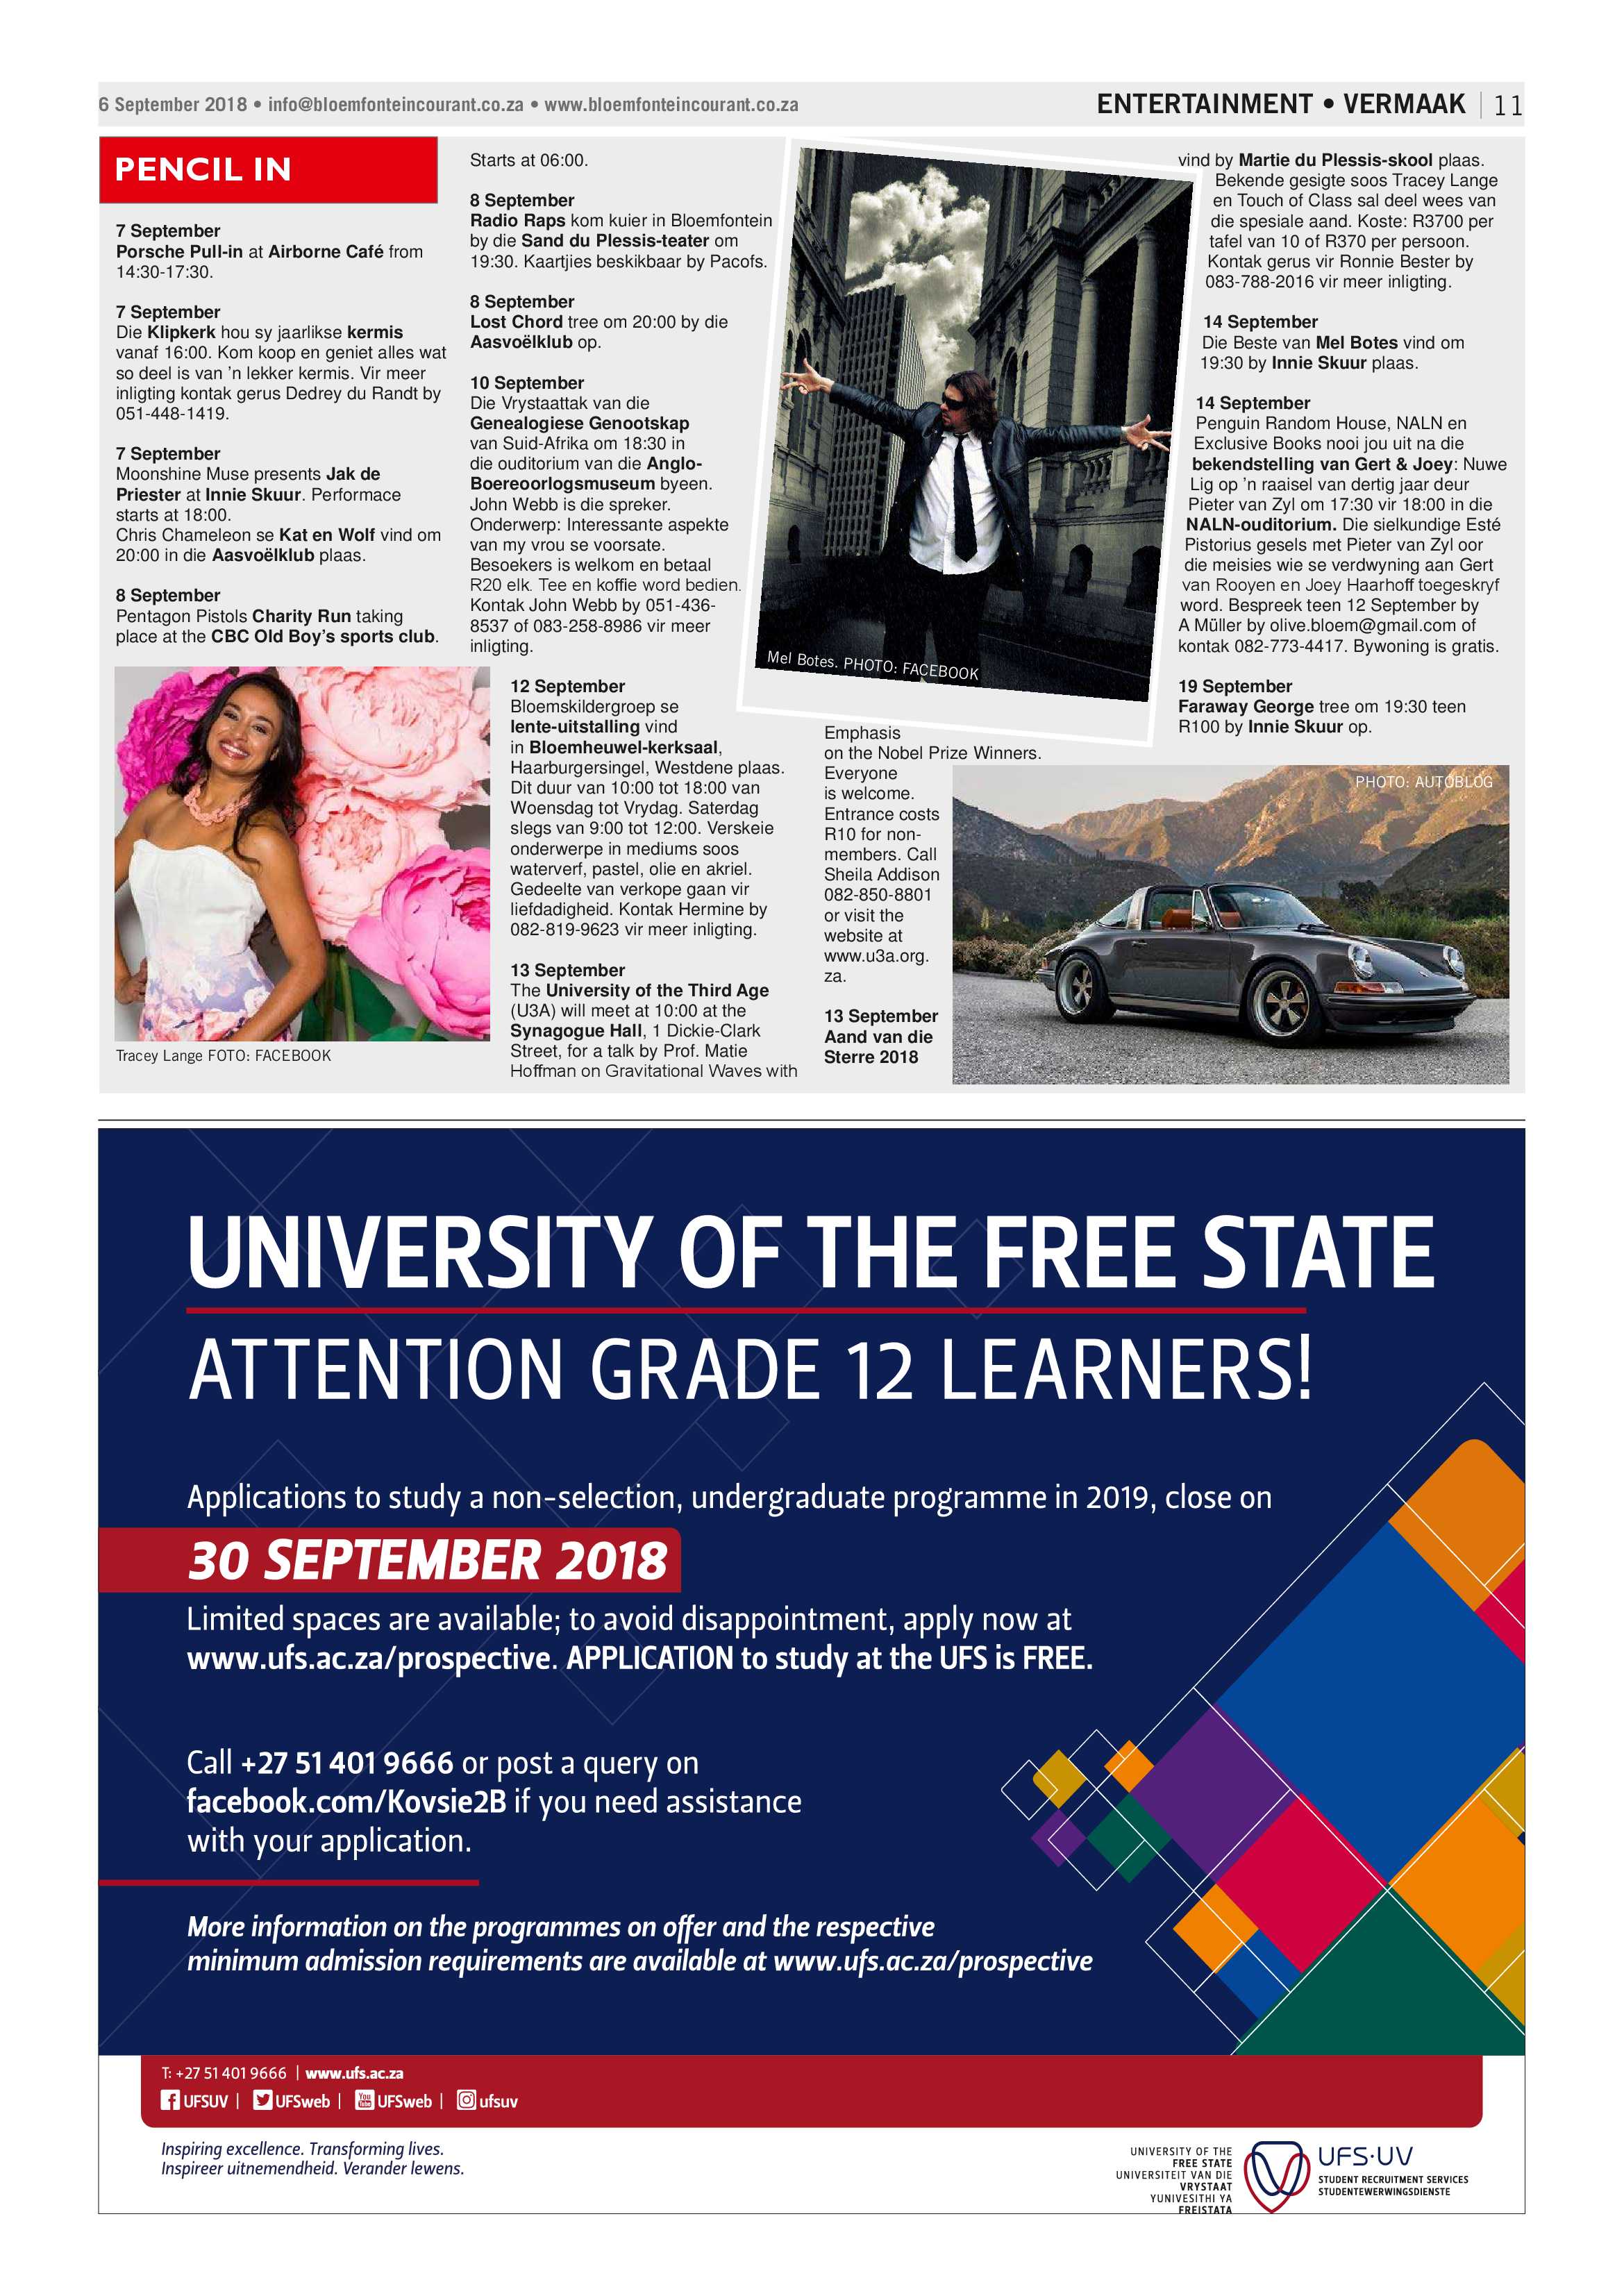 bloemfonteincourant-6-september-2018-epapers-page-11